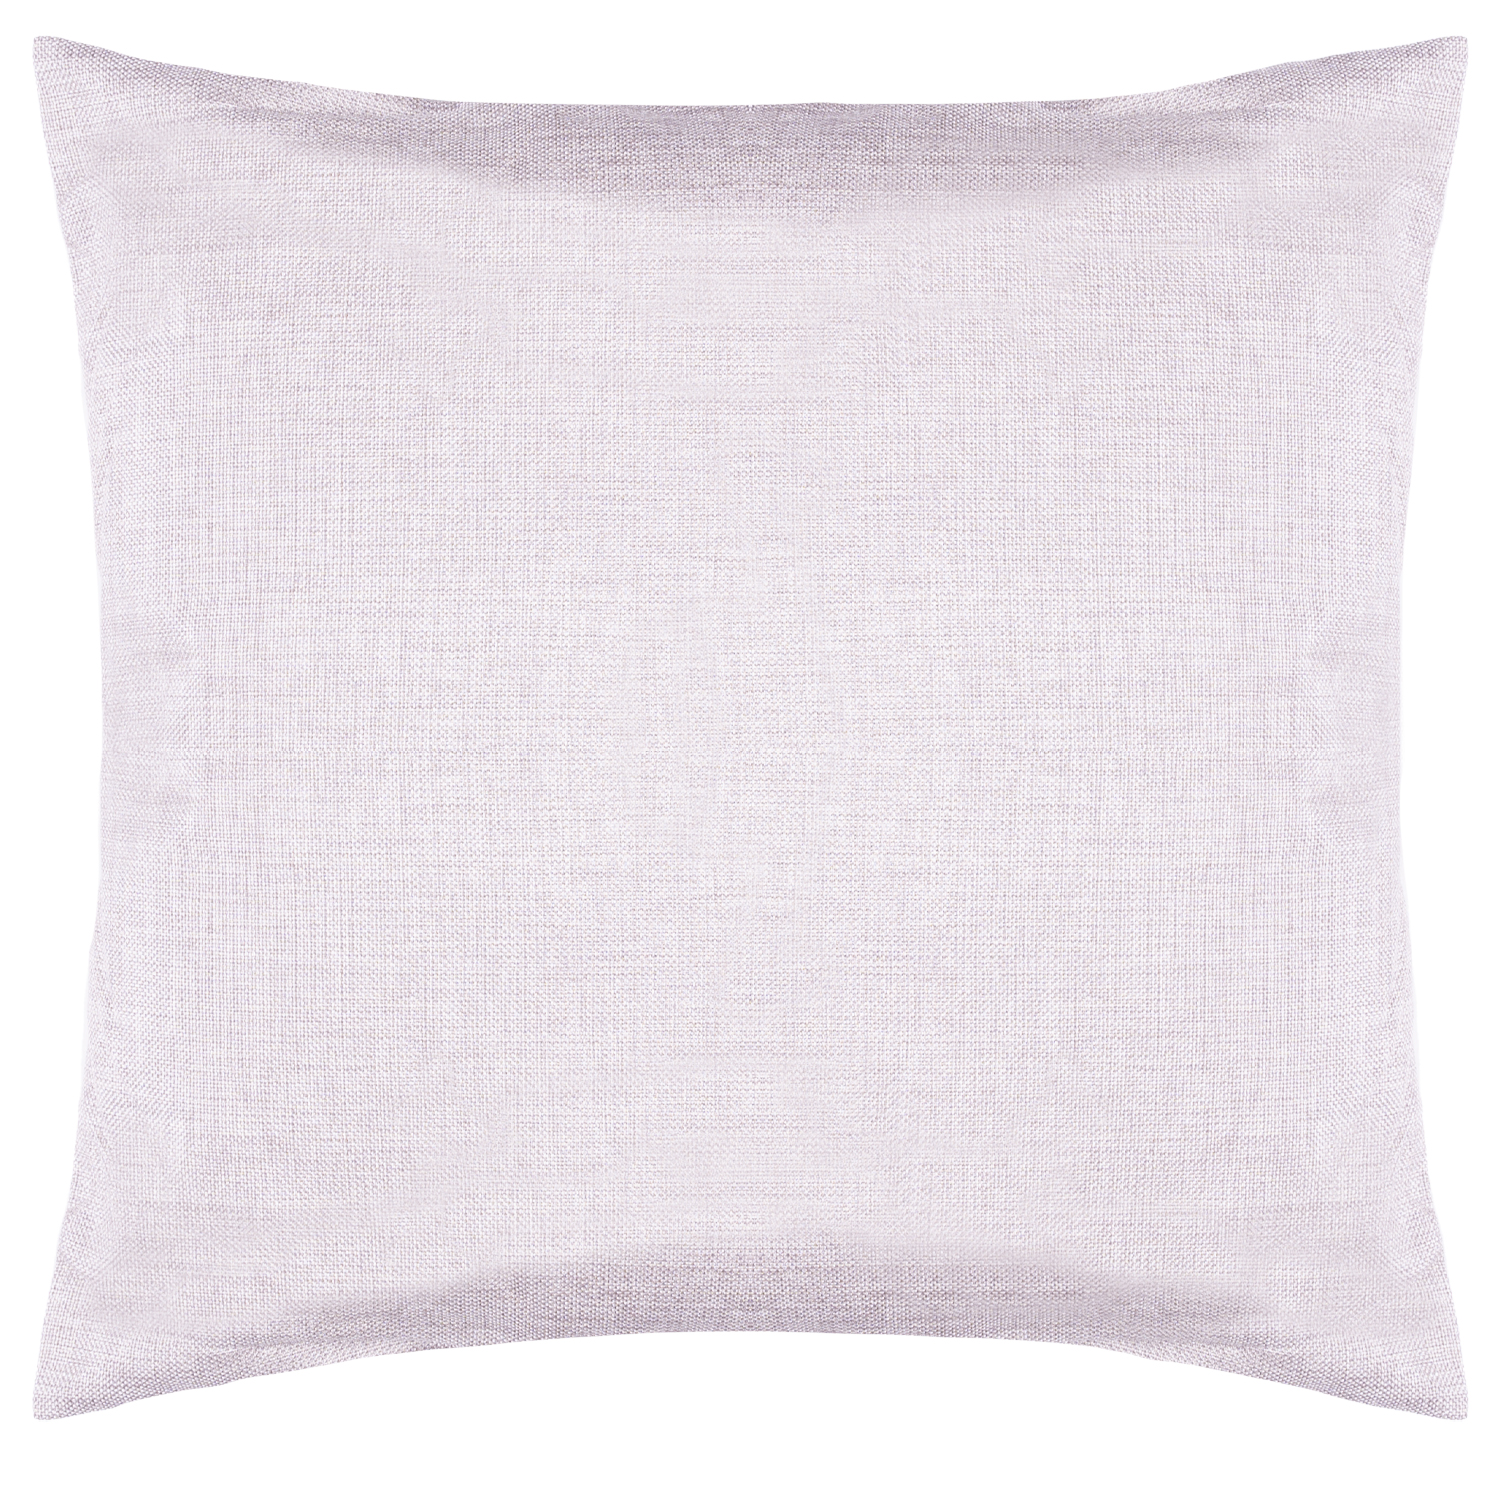 Chita decorative pillow, 18"x18"  - Silver